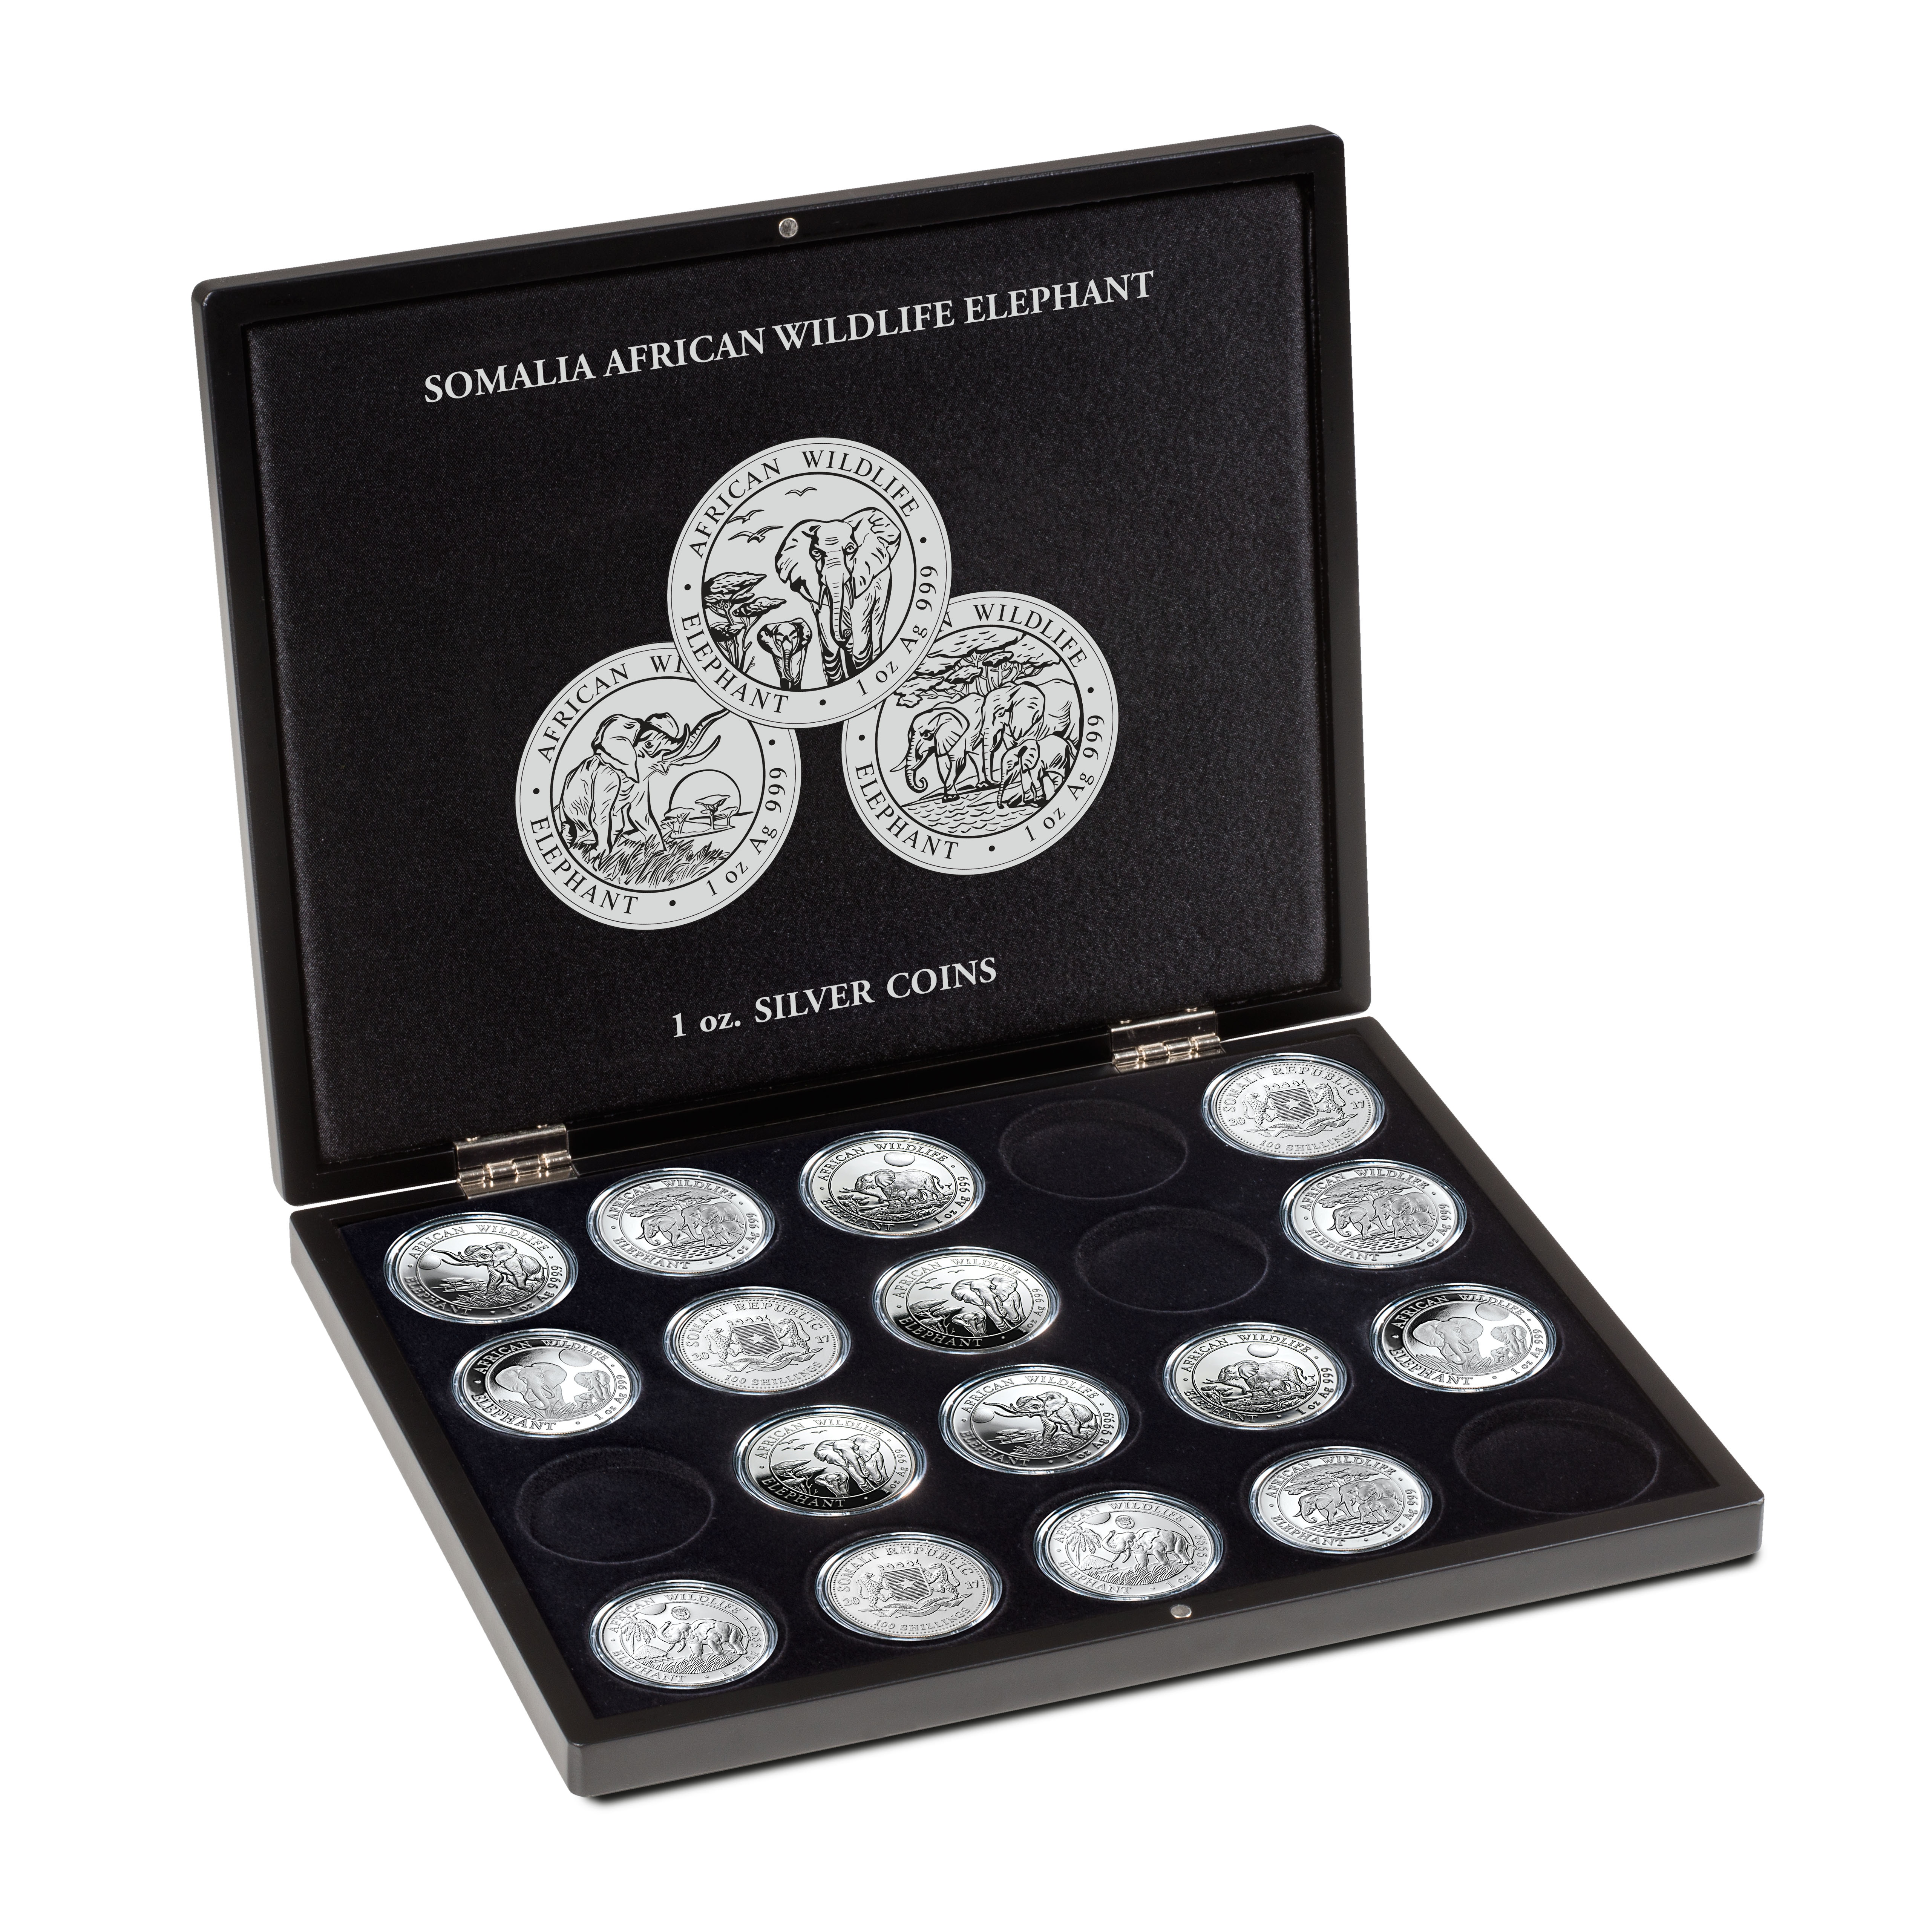 Presentation case for 20 Somalia Elephant silver coins (1 oz.) in ...